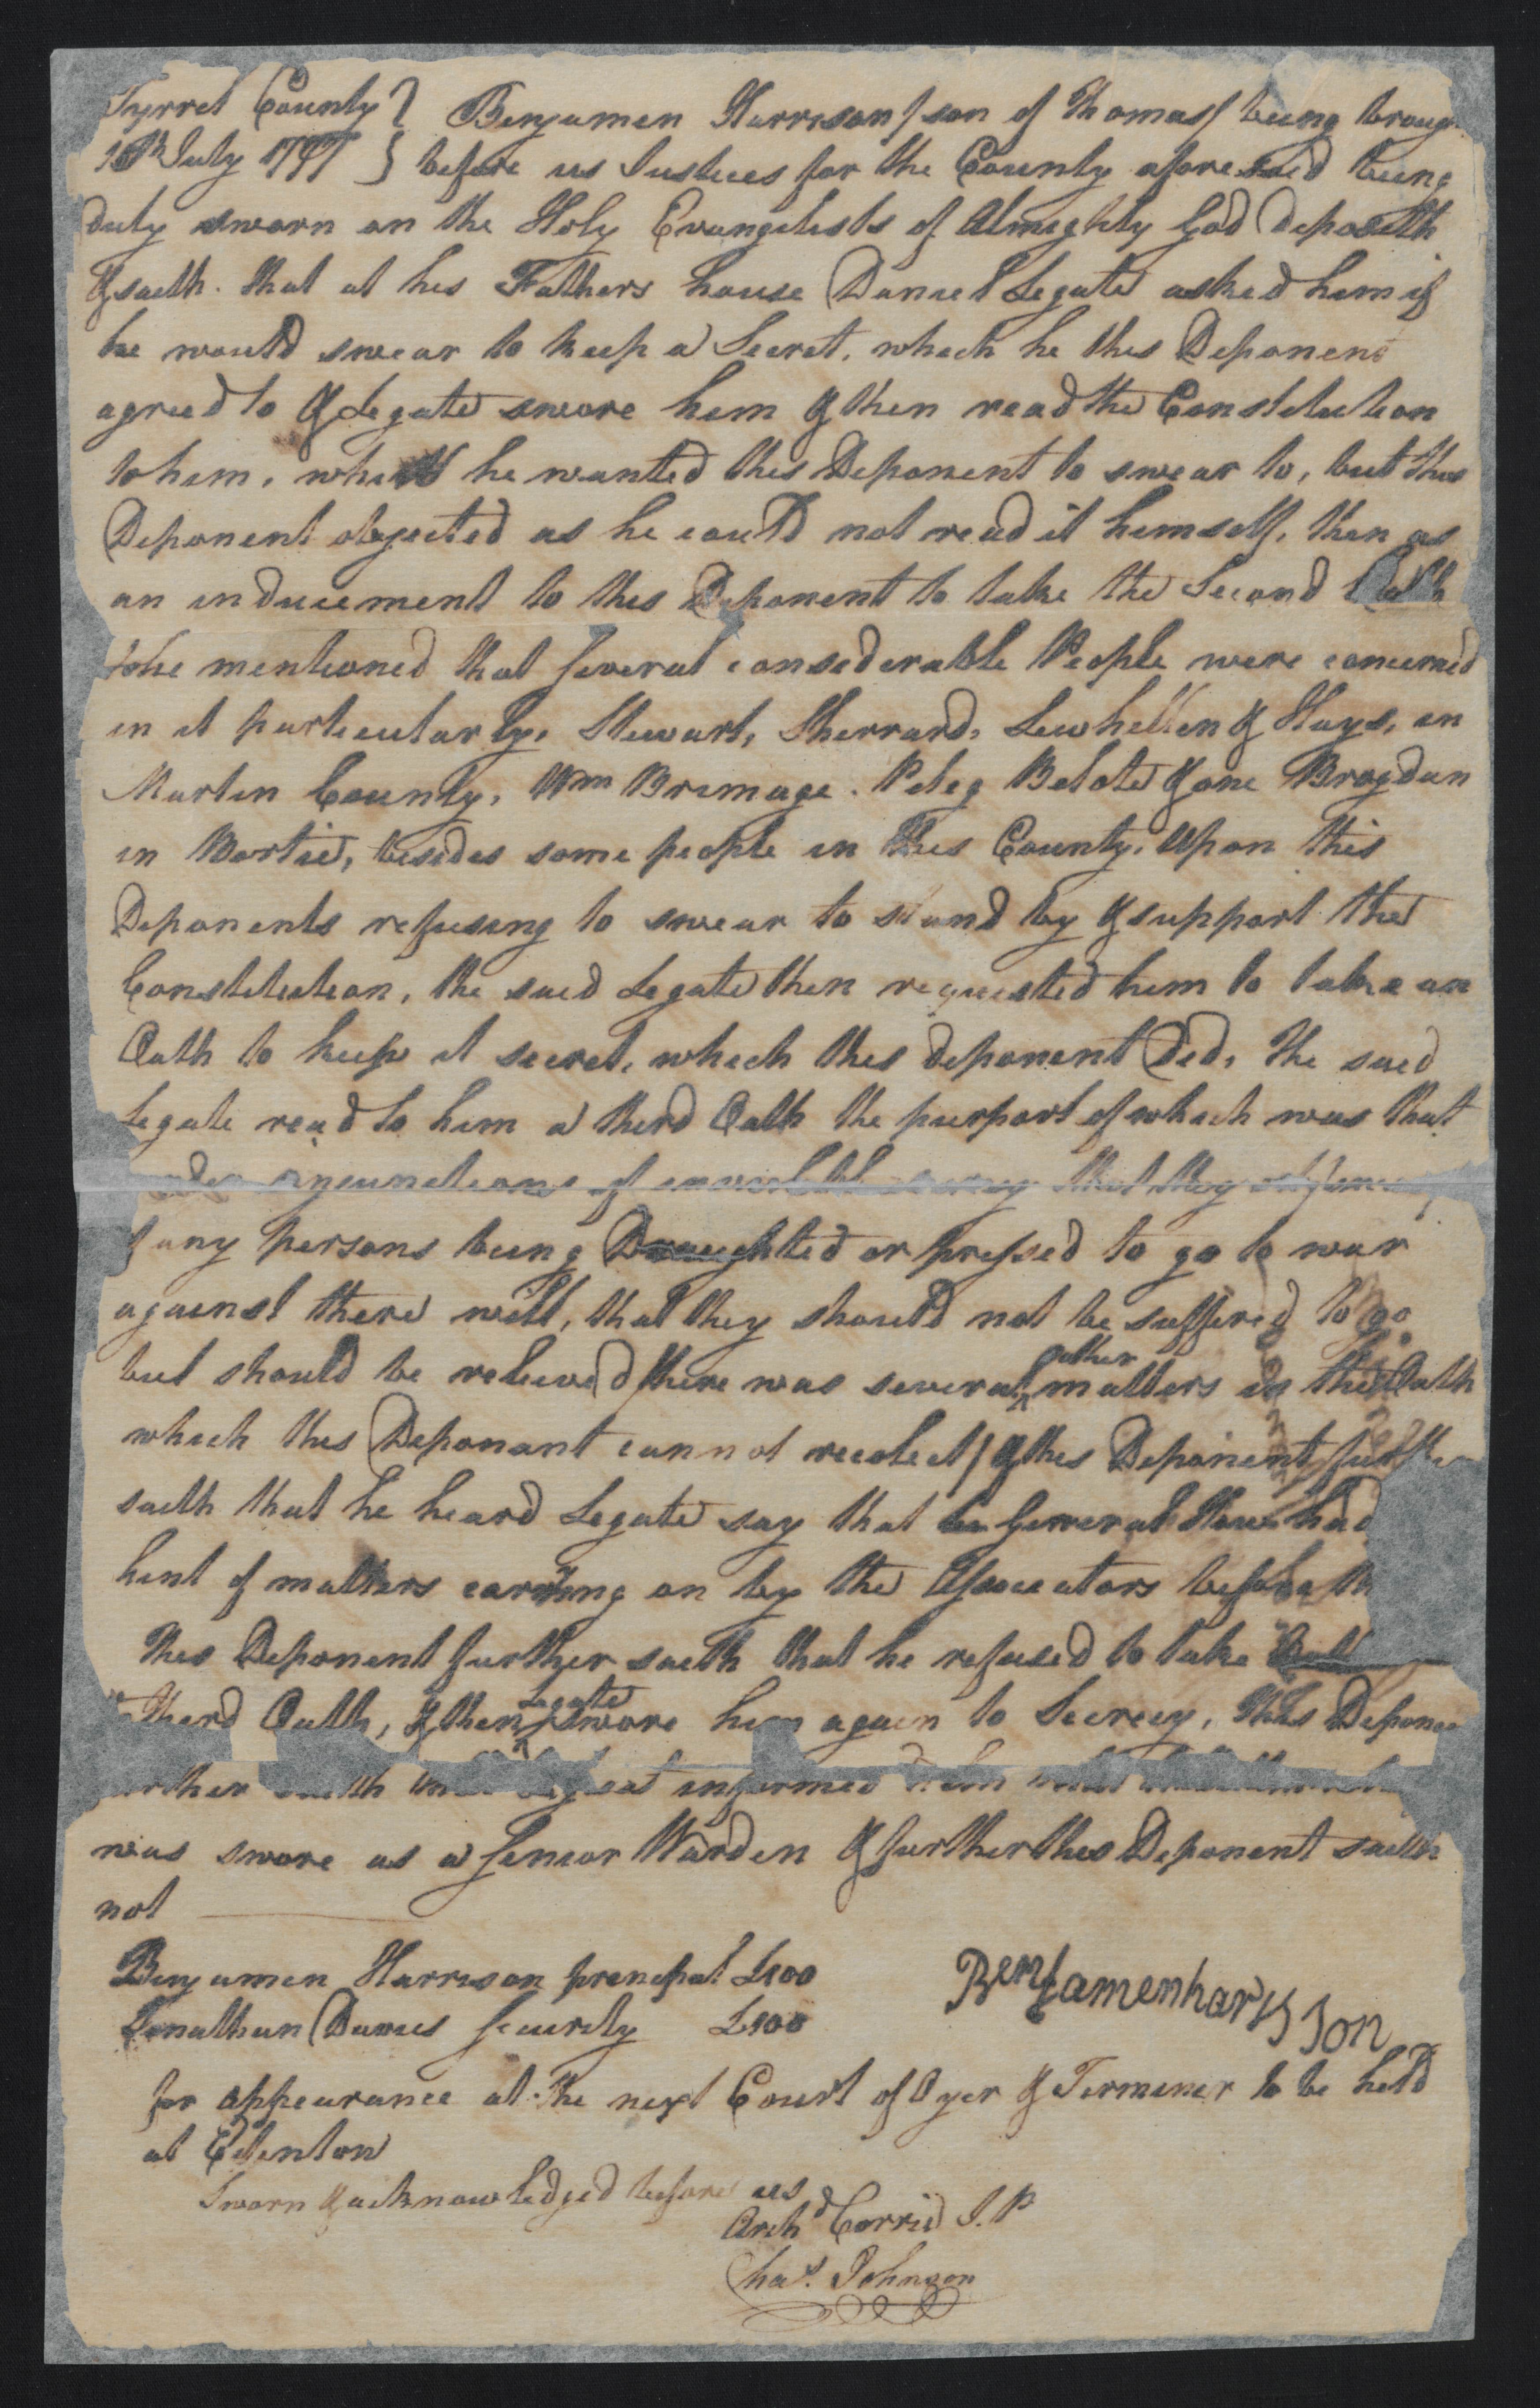 Deposition of Benjamin Harrison, 16 July 1777, page 1